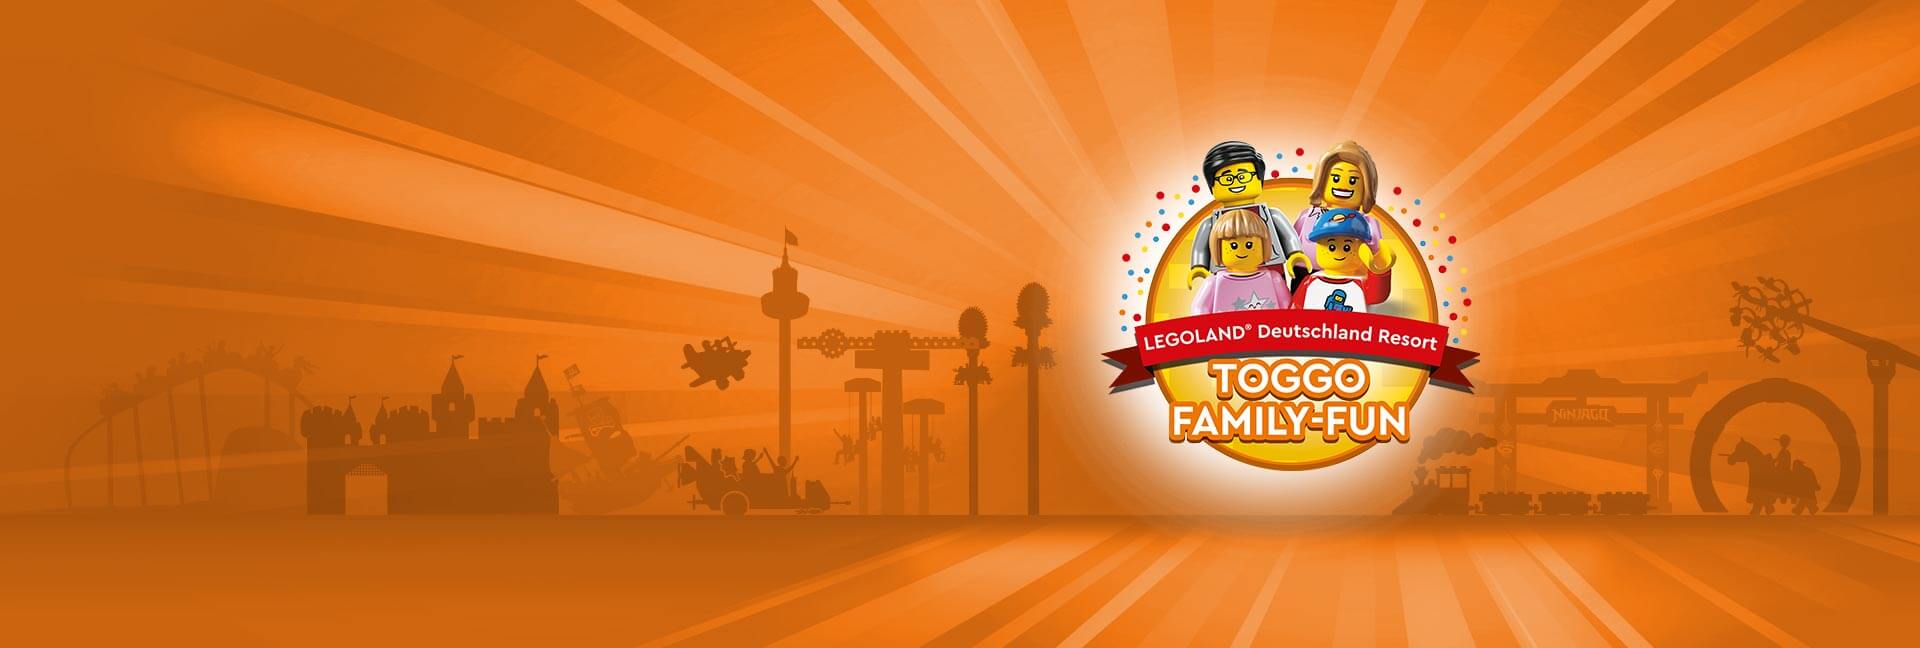 LEGOLAND Event TOGGO Family Fun